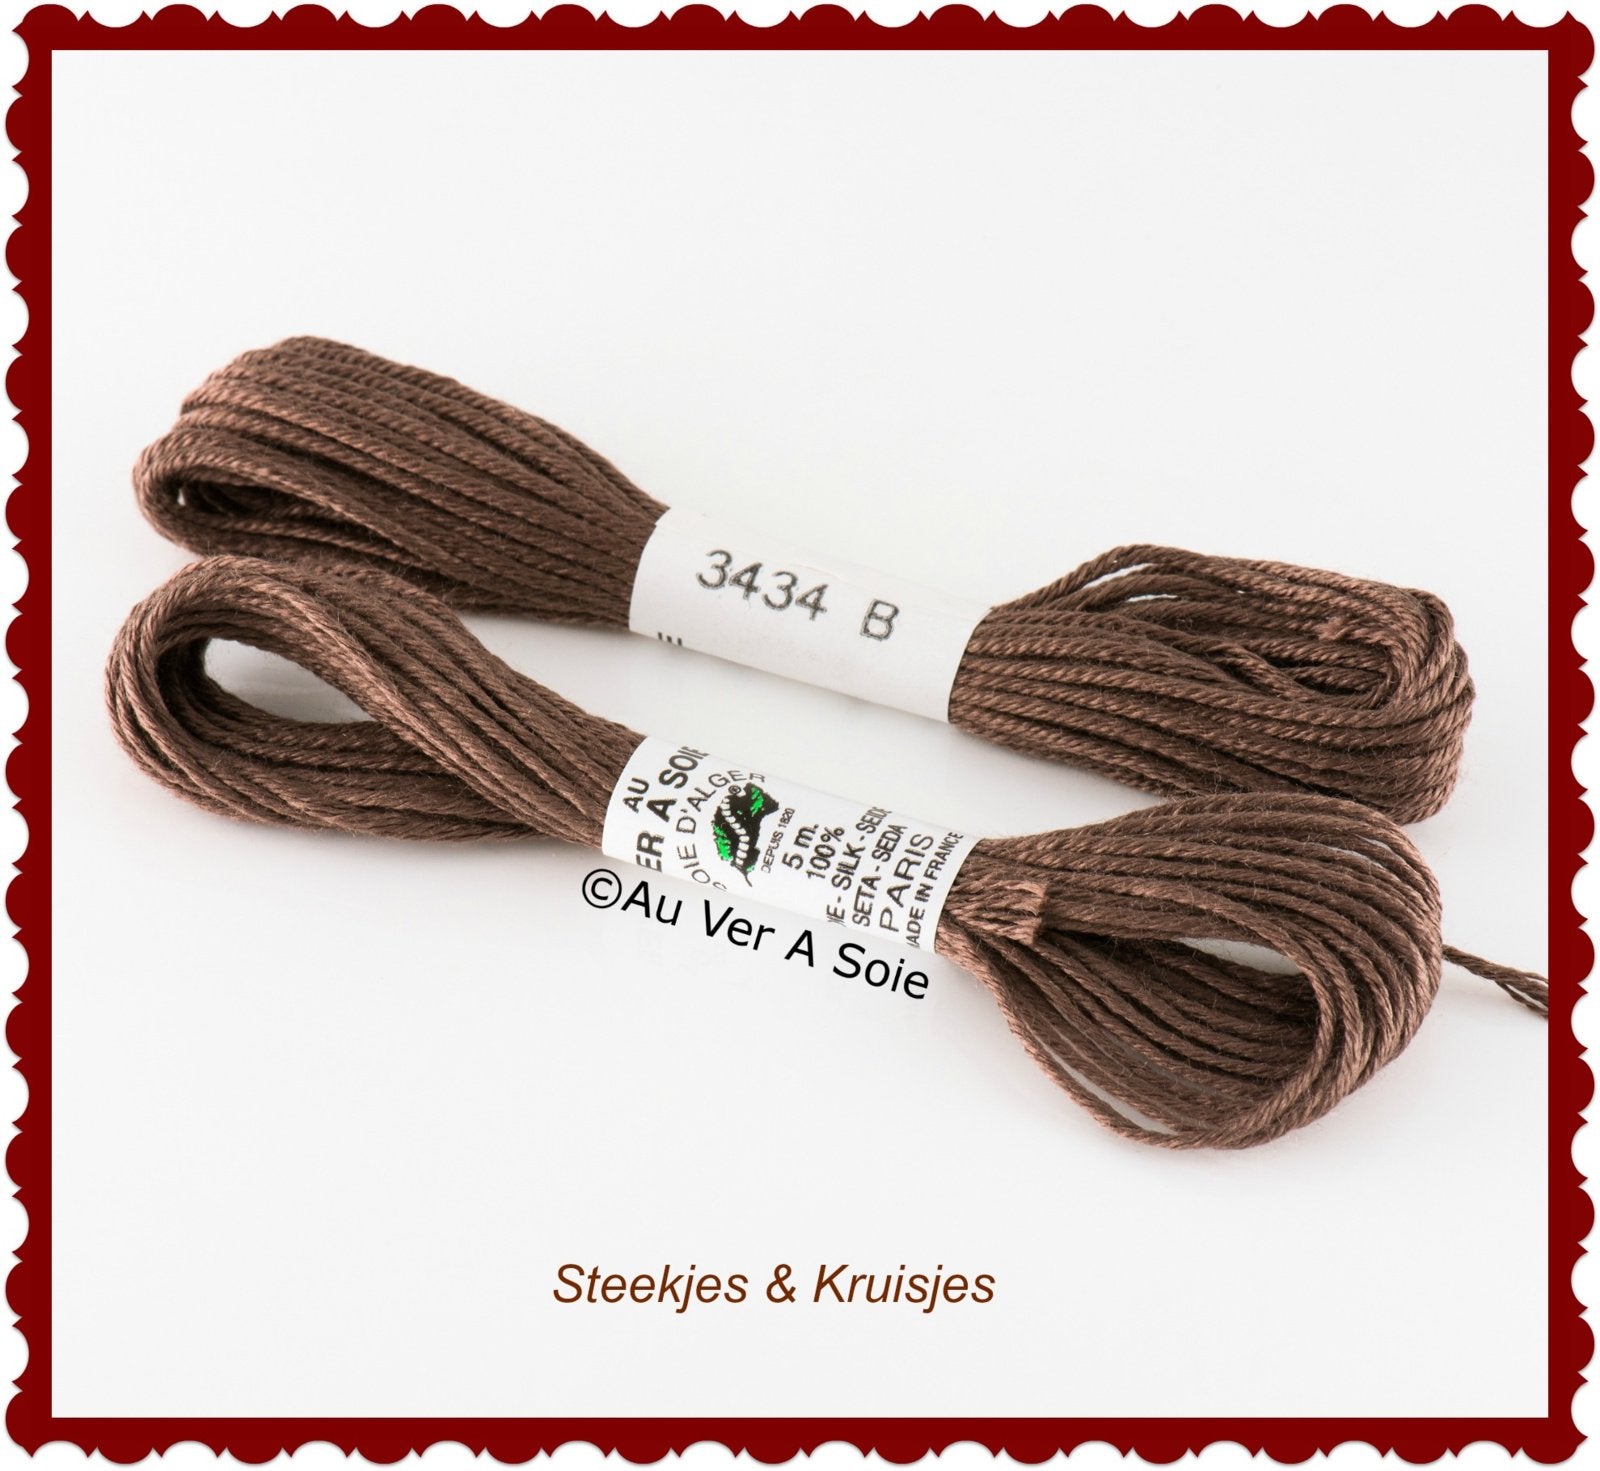 Au ver ie "soie d'alger" silk yarn color no. 3434